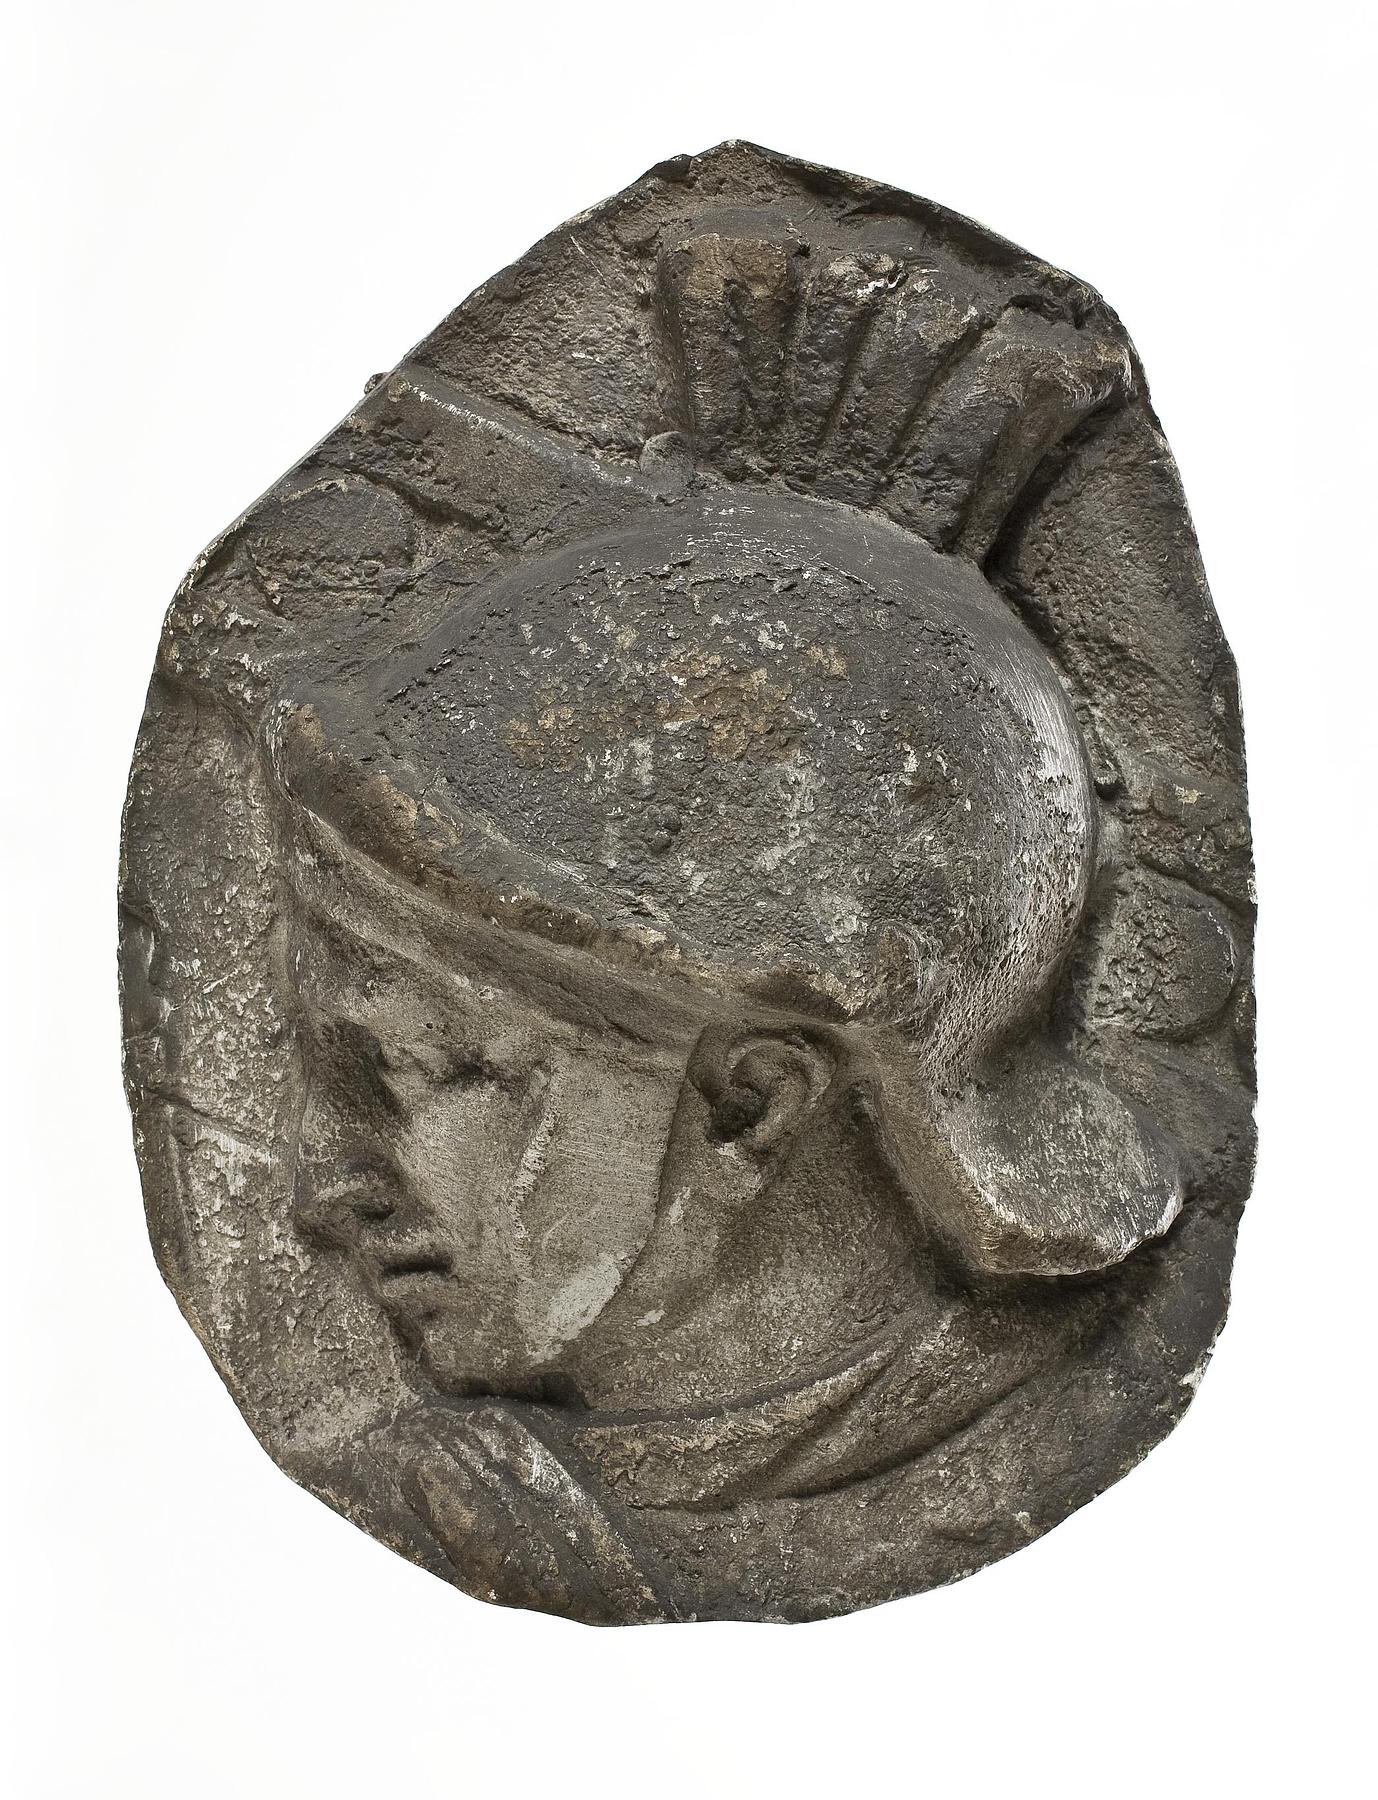 Head of a helmeted legionary, L326cc